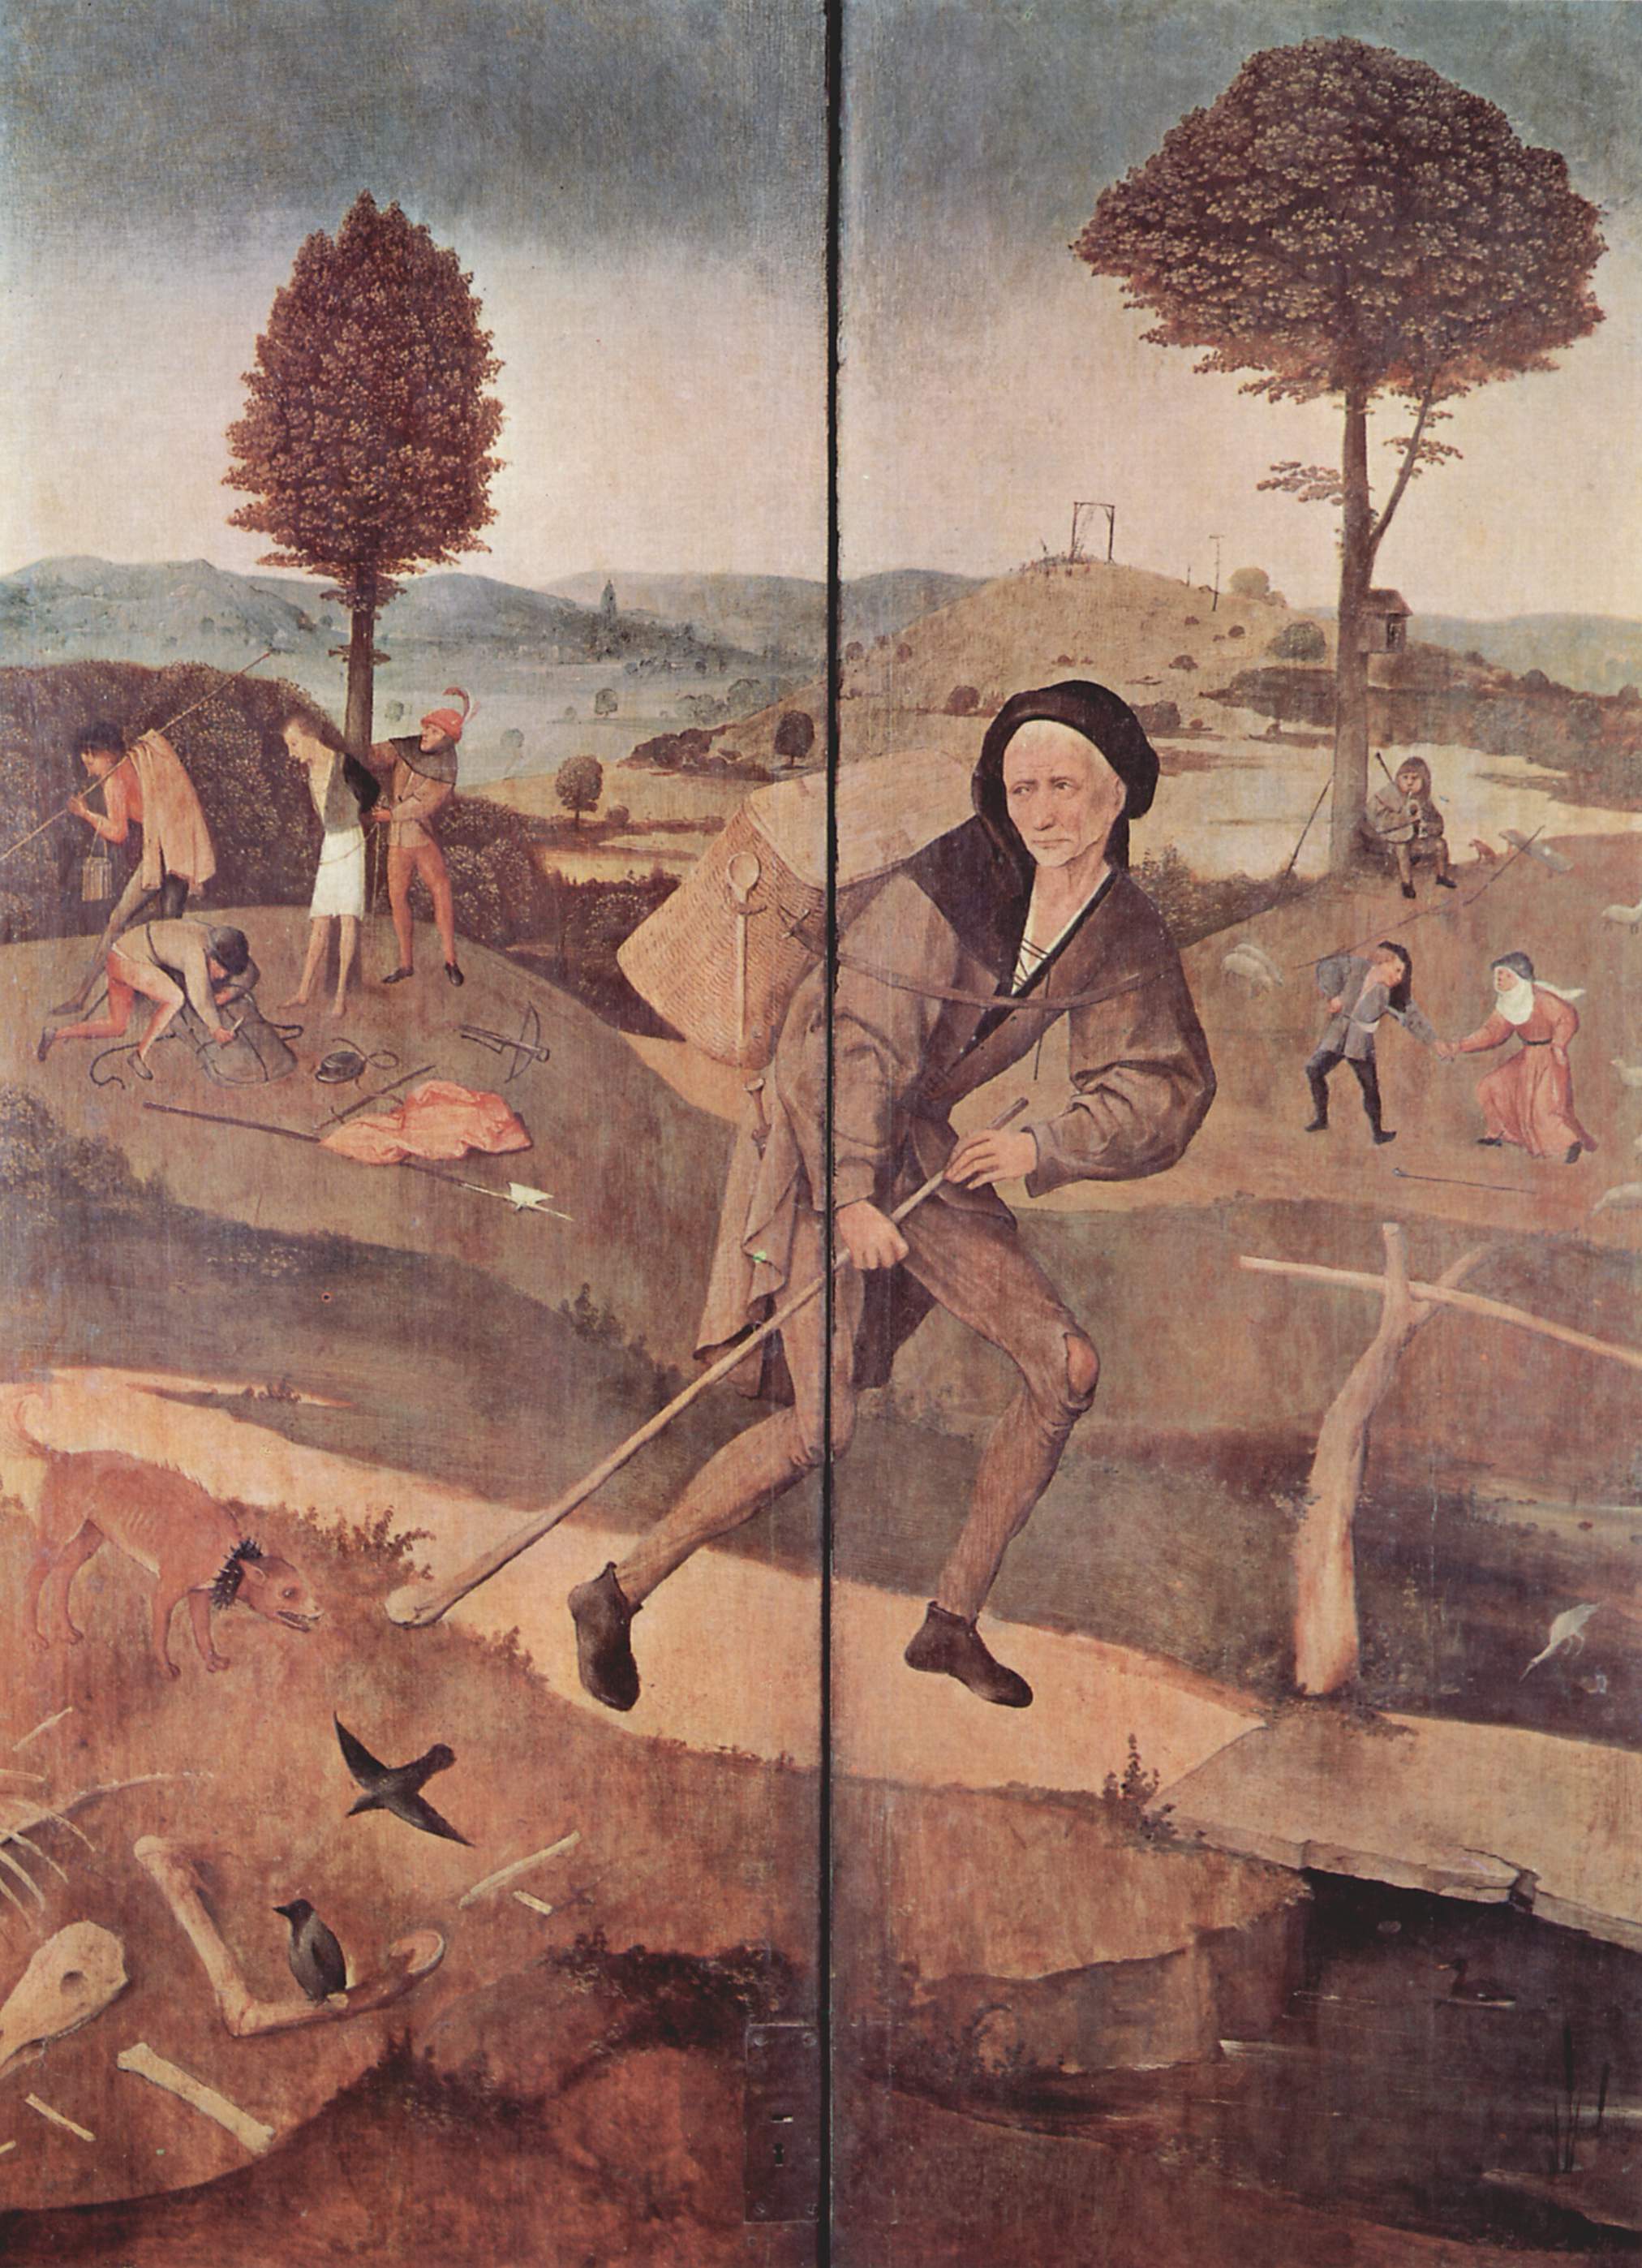 Hieronymus_Bosch Le vagabond vers 1516 Prado revers du triptyque du Chariot de foin